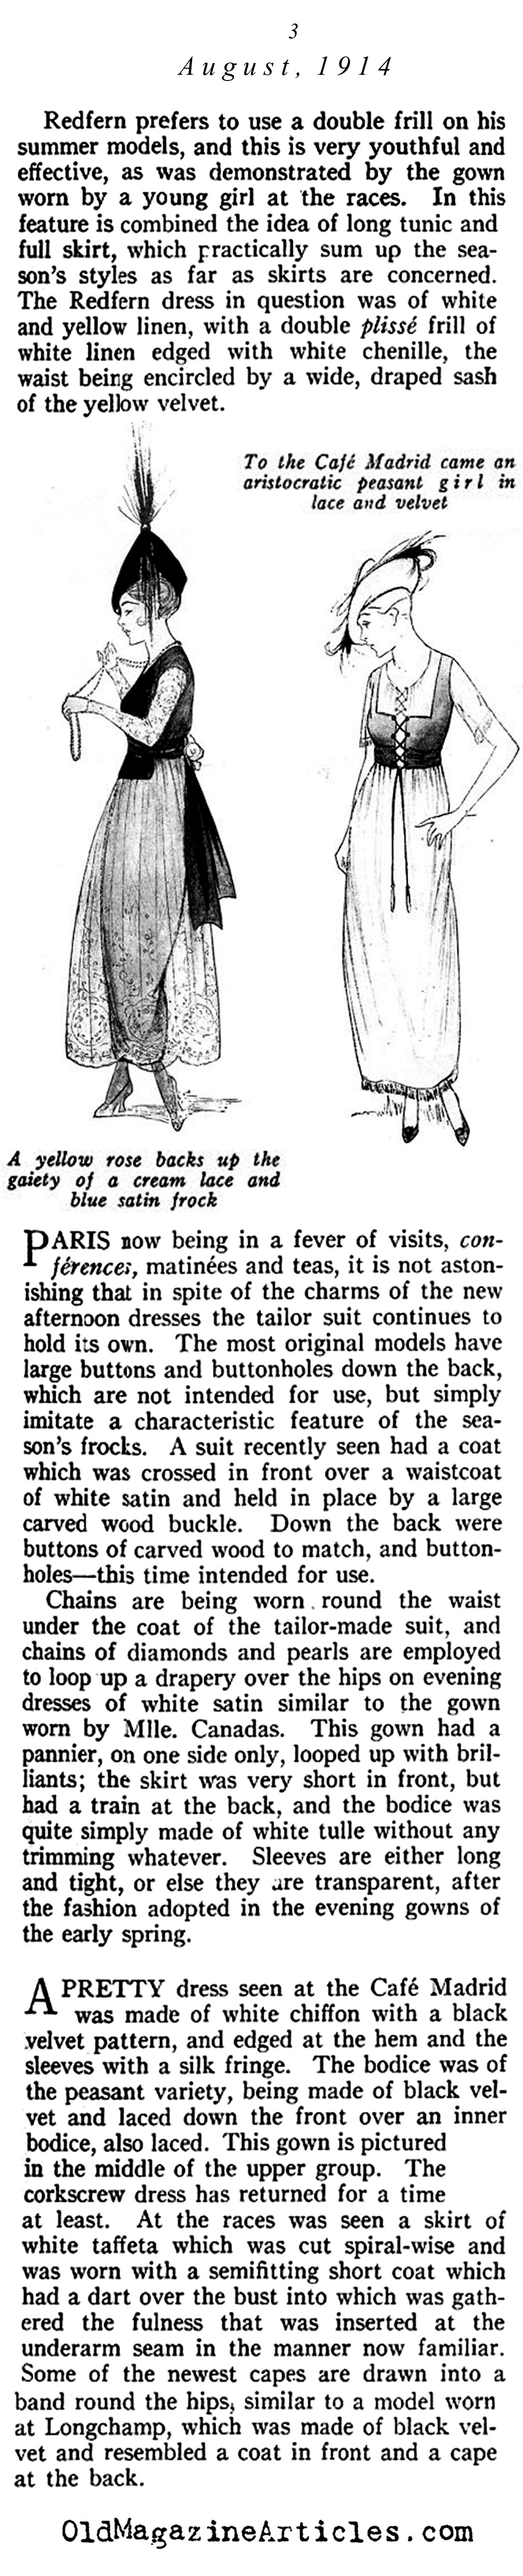 Summer Mode for an Era's End (Vanity Fair Magazine, 1914)